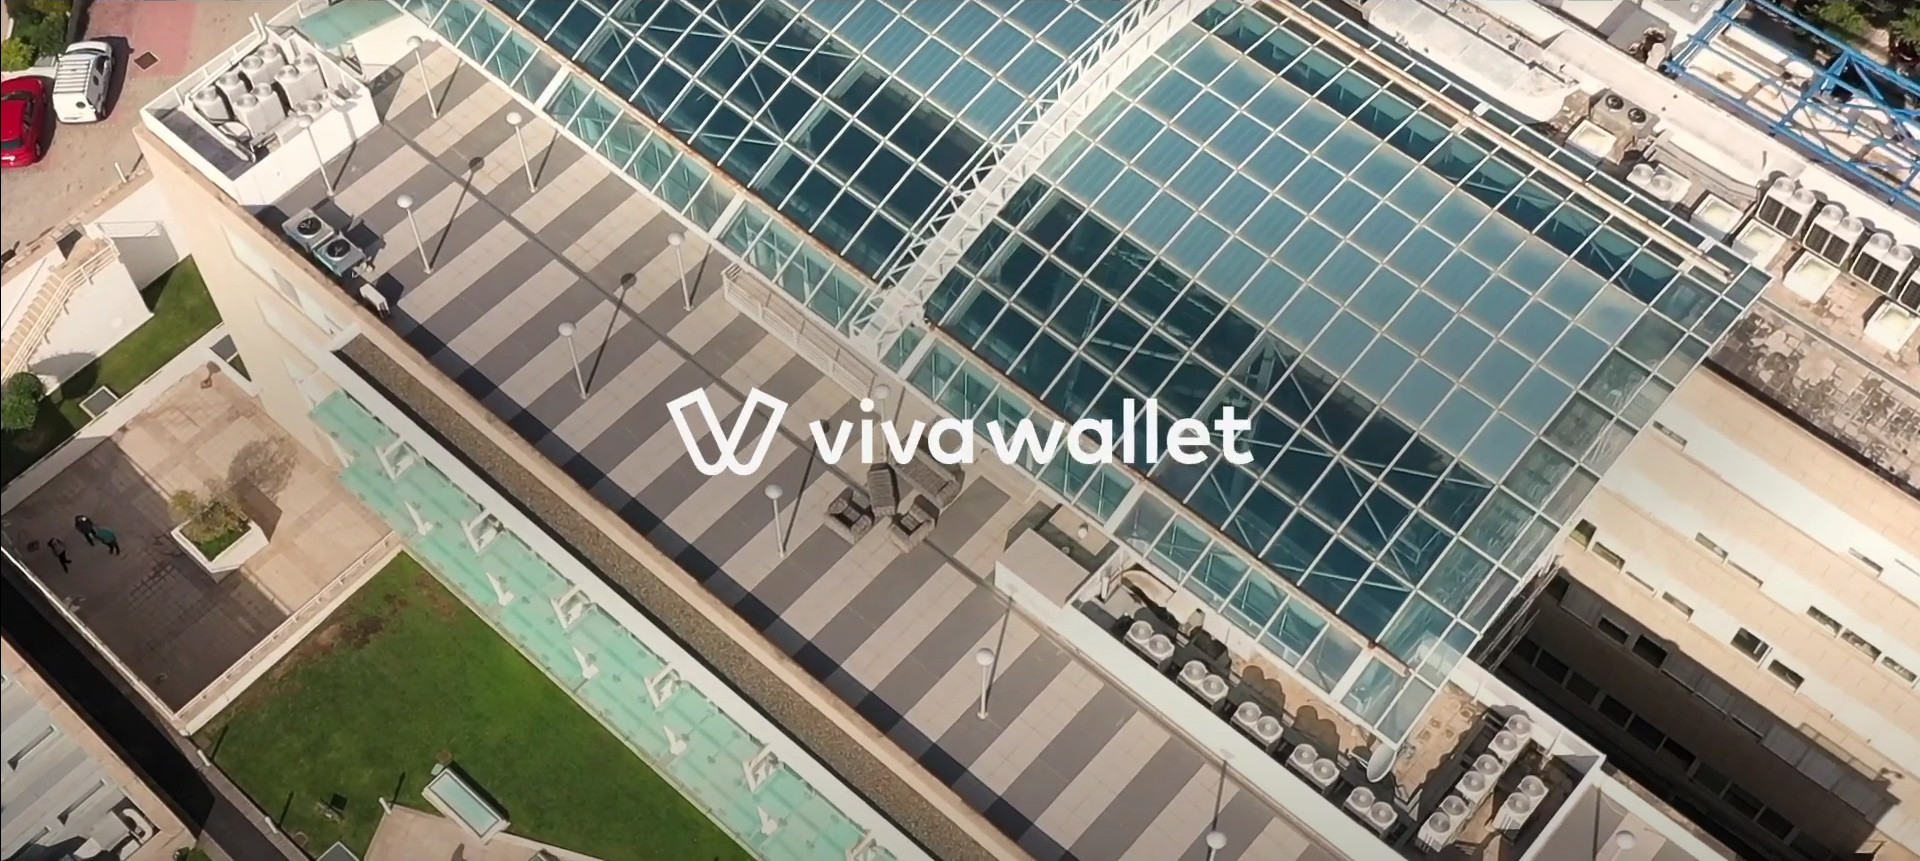 VIVA WALLET COMPANY VIDEO